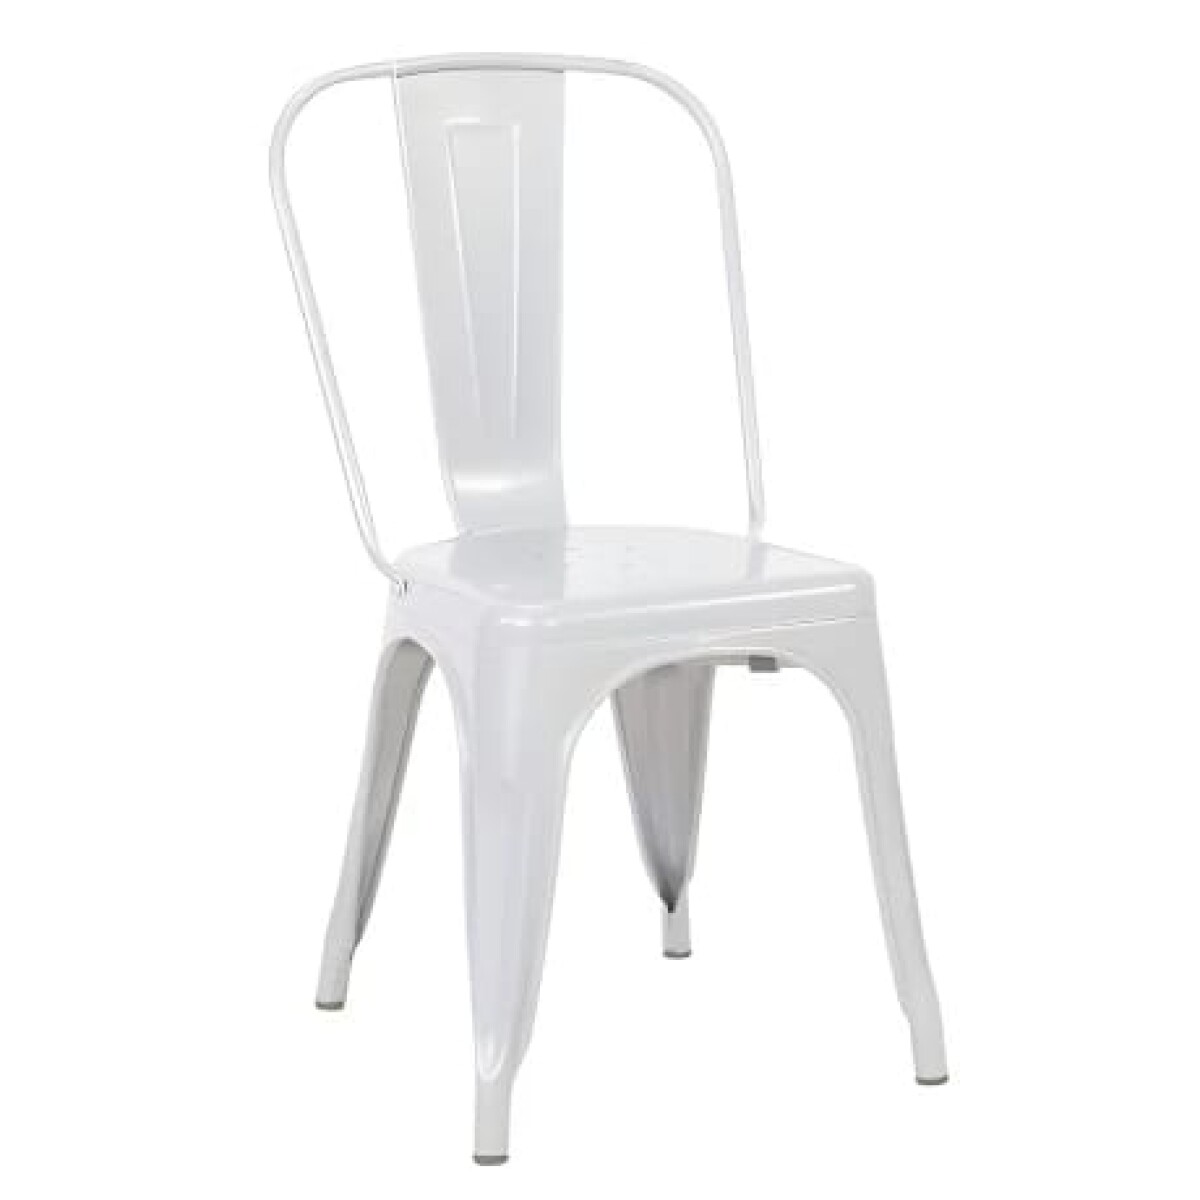 Tolix silla metálica apilable blanco - TOLIX 